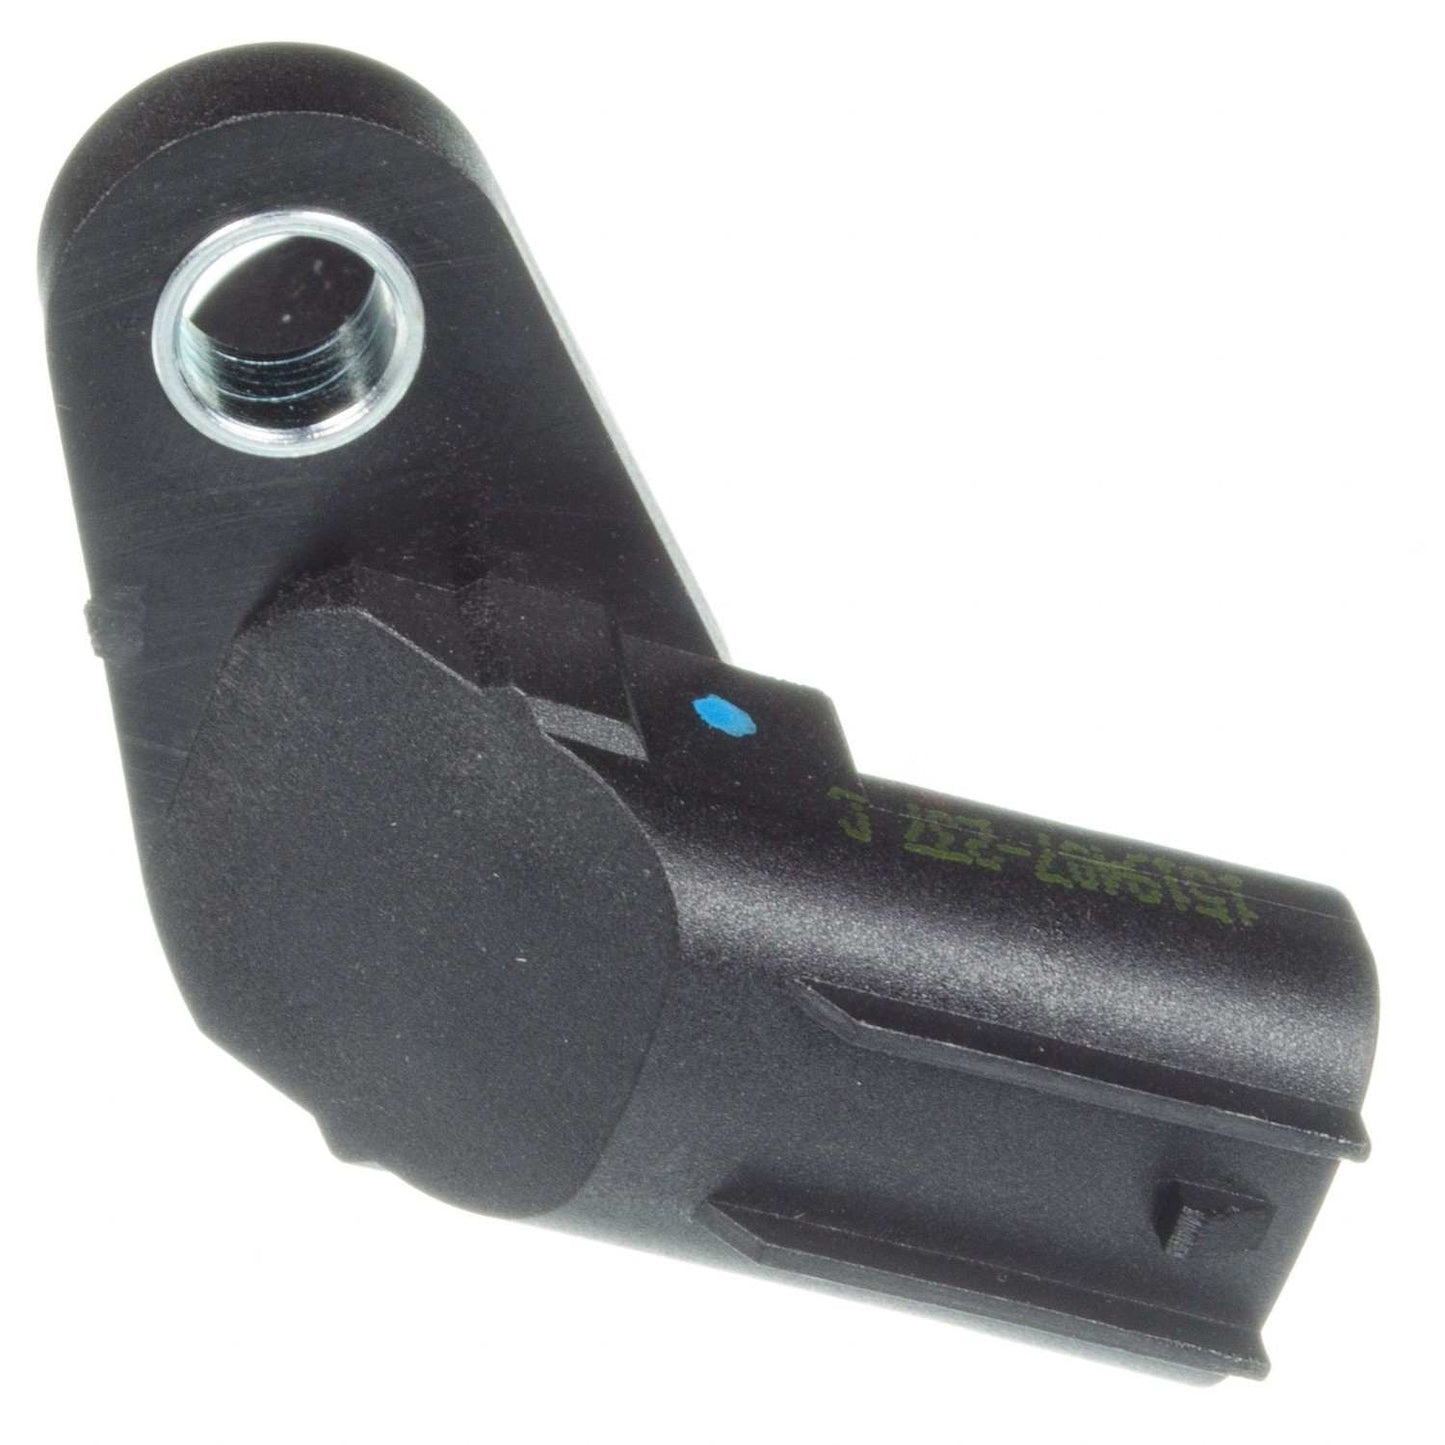 Back View of Vehicle Speed Sensor HOLSTEIN 2VSS0058